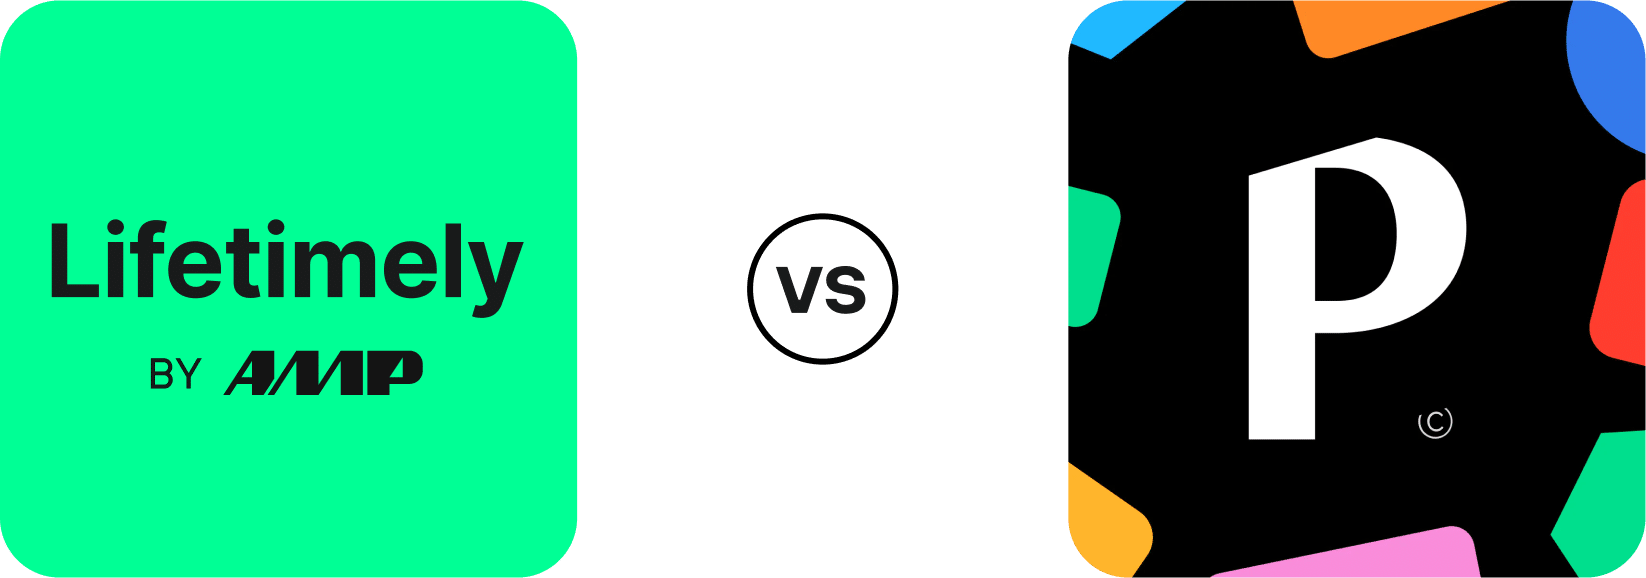 Lifetimely vs Peel Insights_web